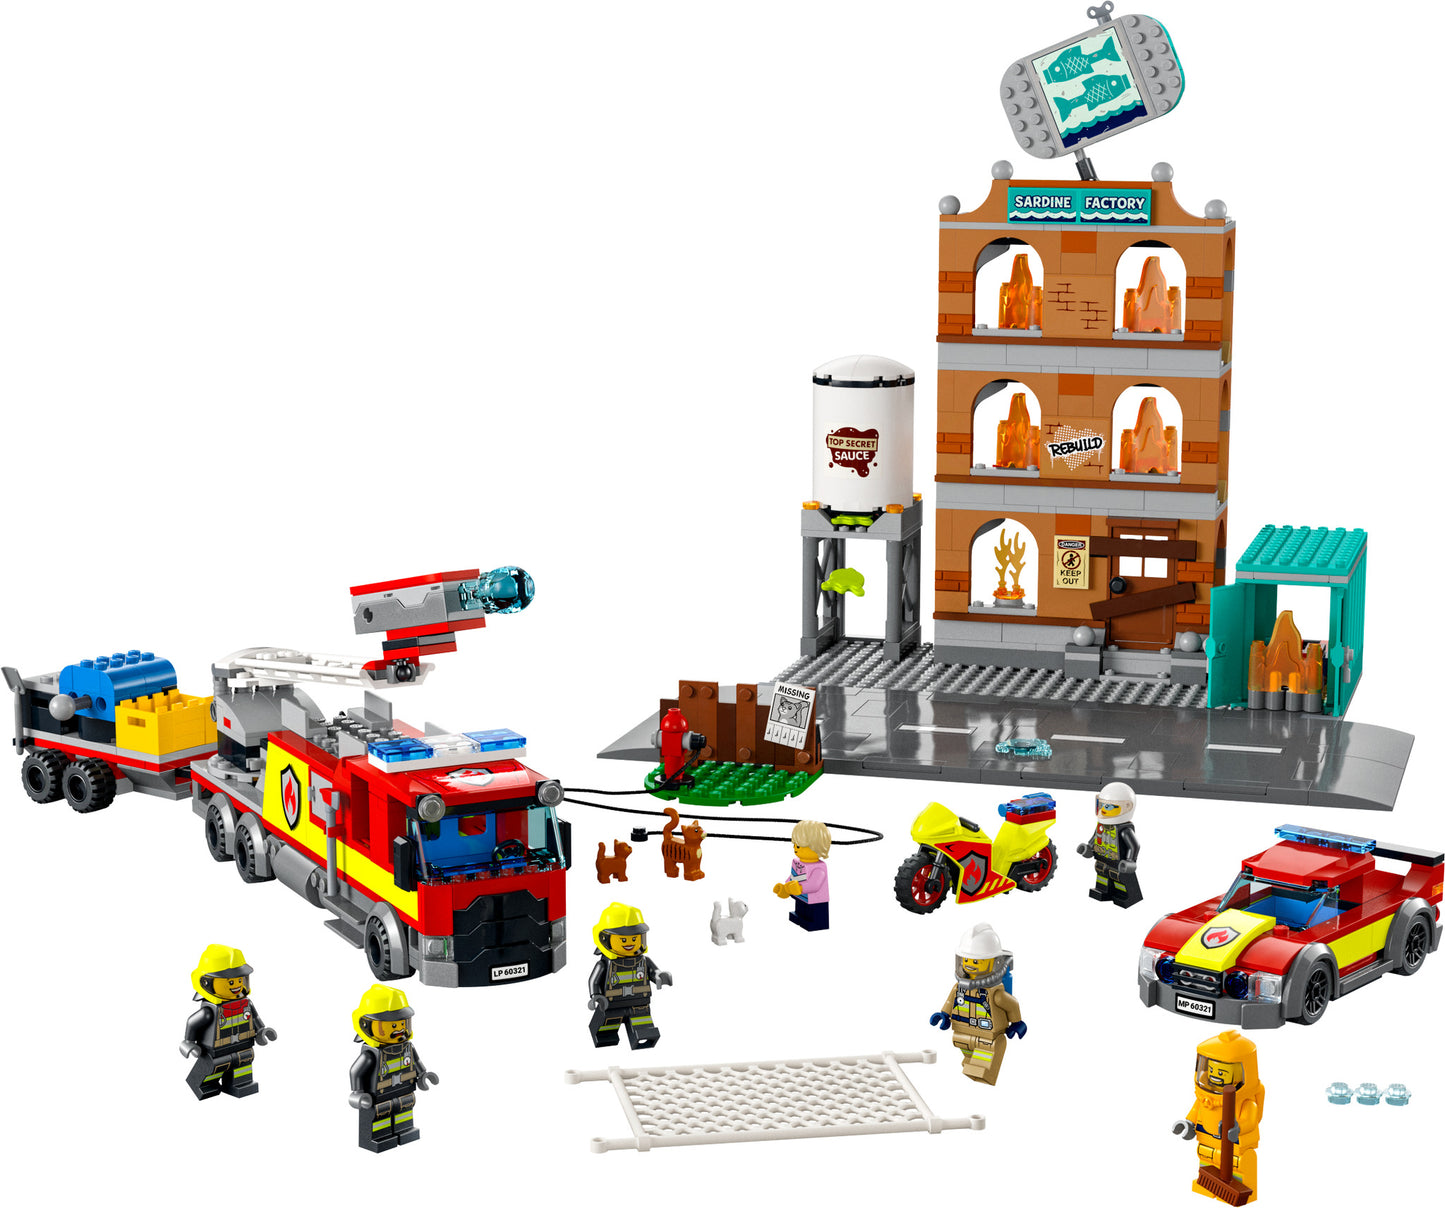 60321 LEGO City - Vigili del Fuoco